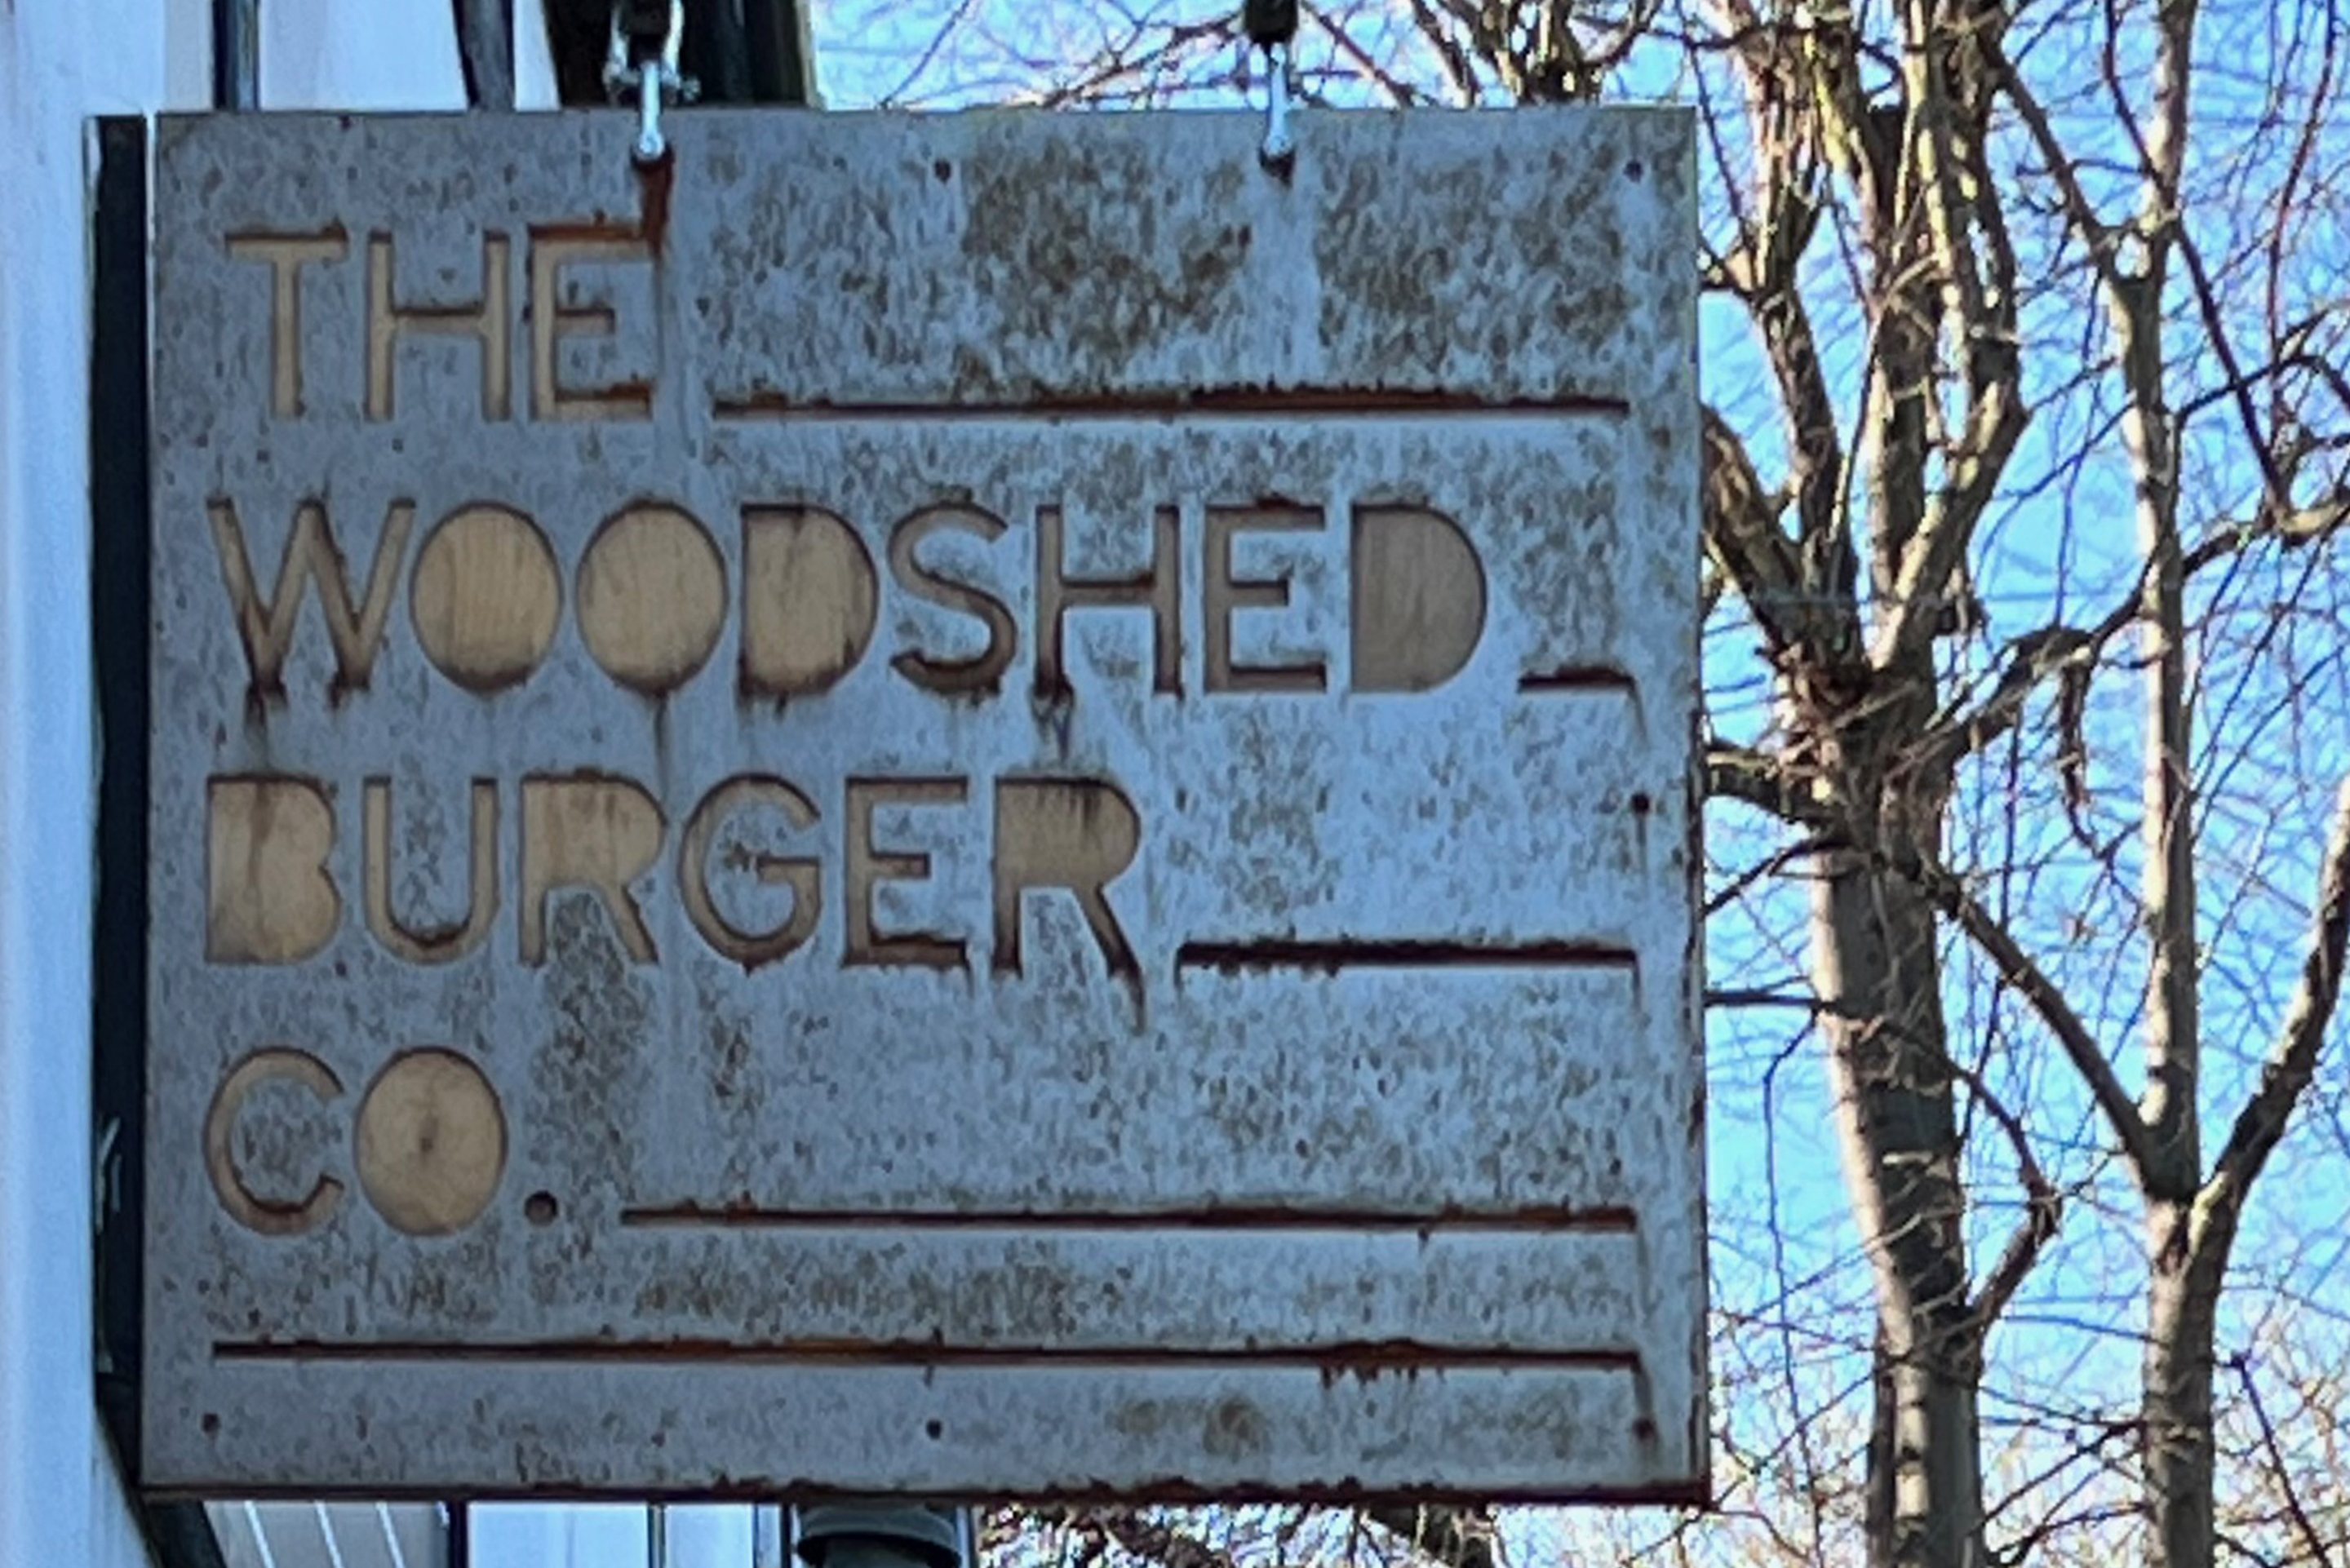 The Woodshed Burger Co